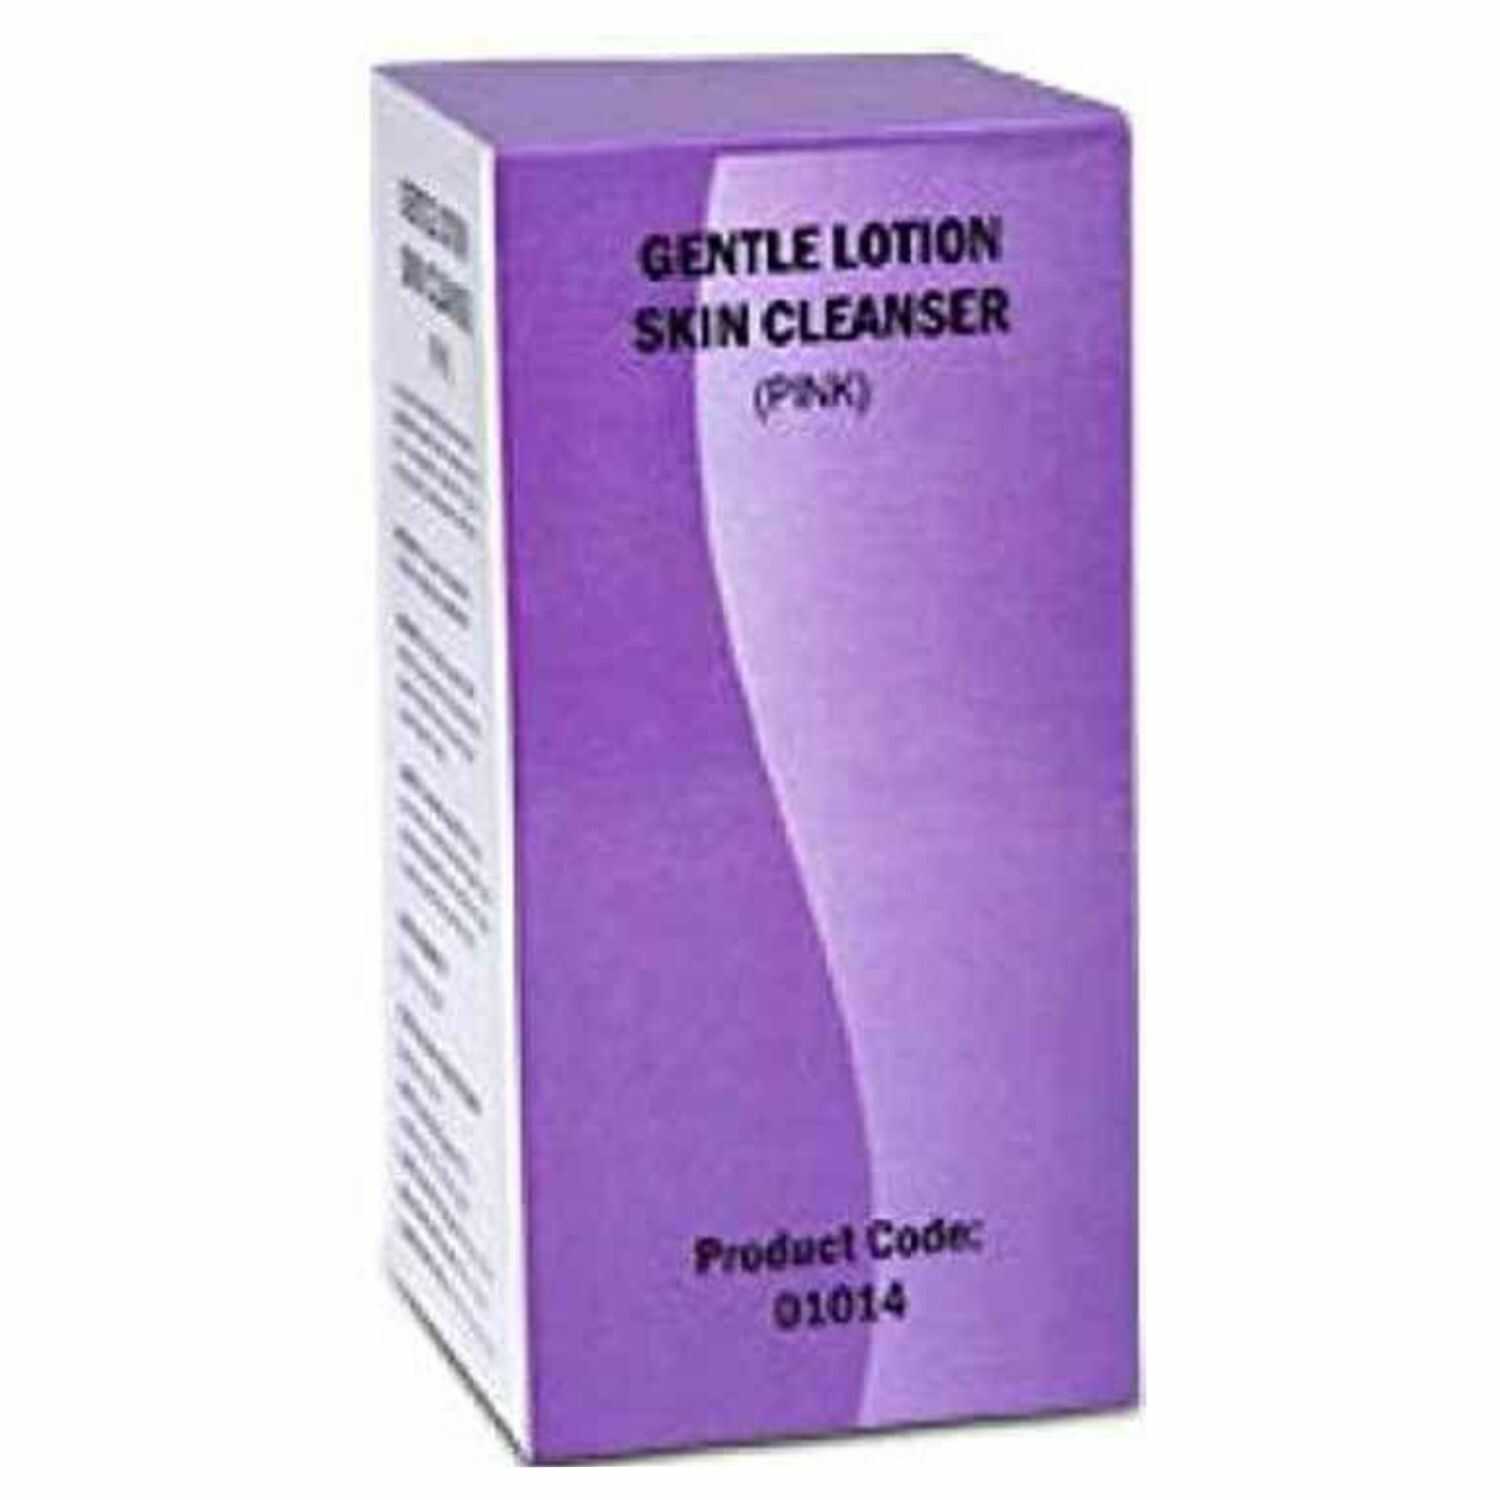 Kimberly Clark* gentle Lotion Skin Cleanser Refill, 01014 ( Pack of 18 Refills/Case, 500ml/Refill, Total 9000ml )